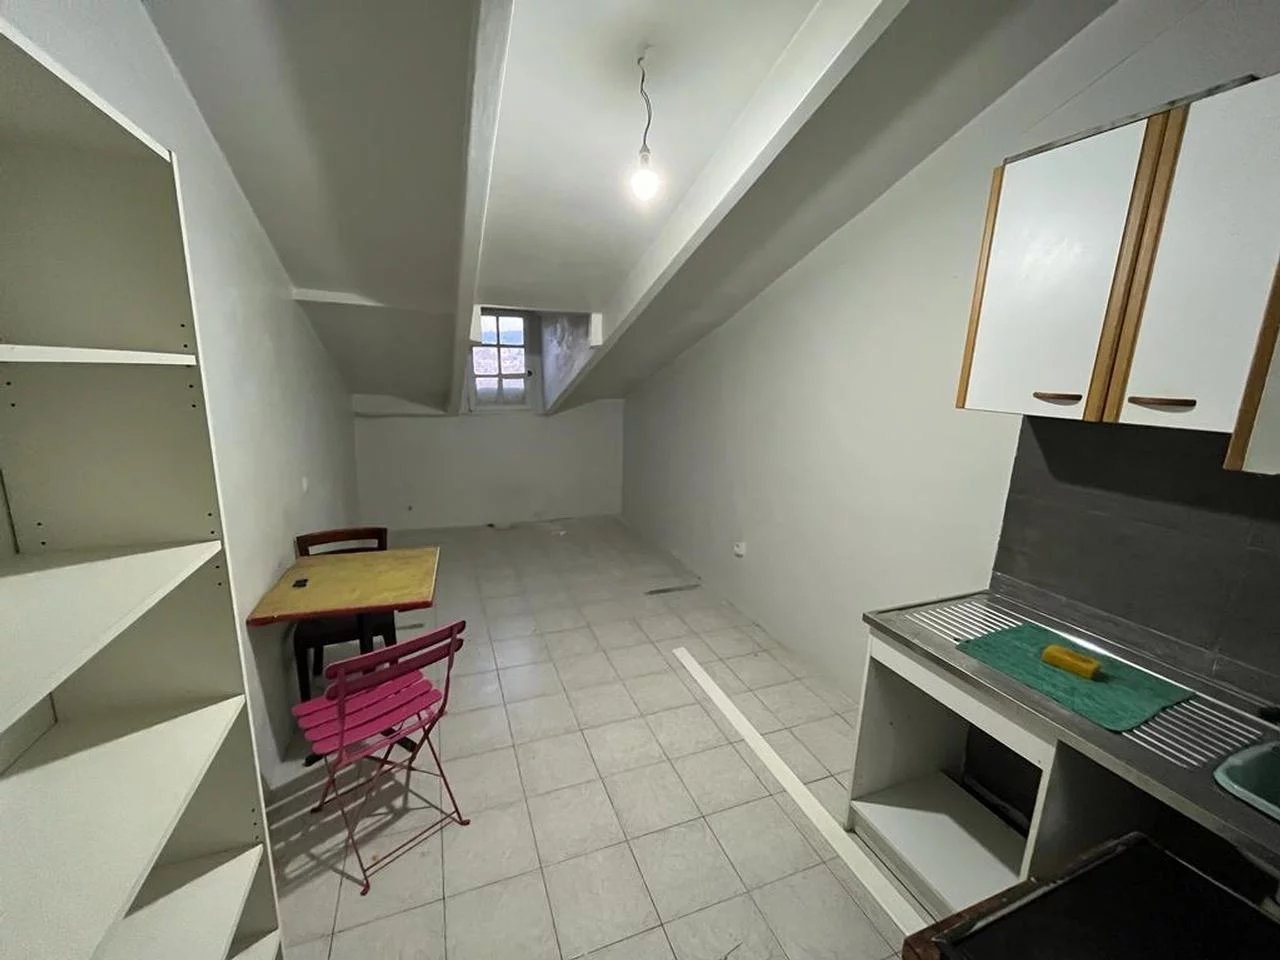 Appartement  1 Locali 12.8m2  In vendita    85 000 €